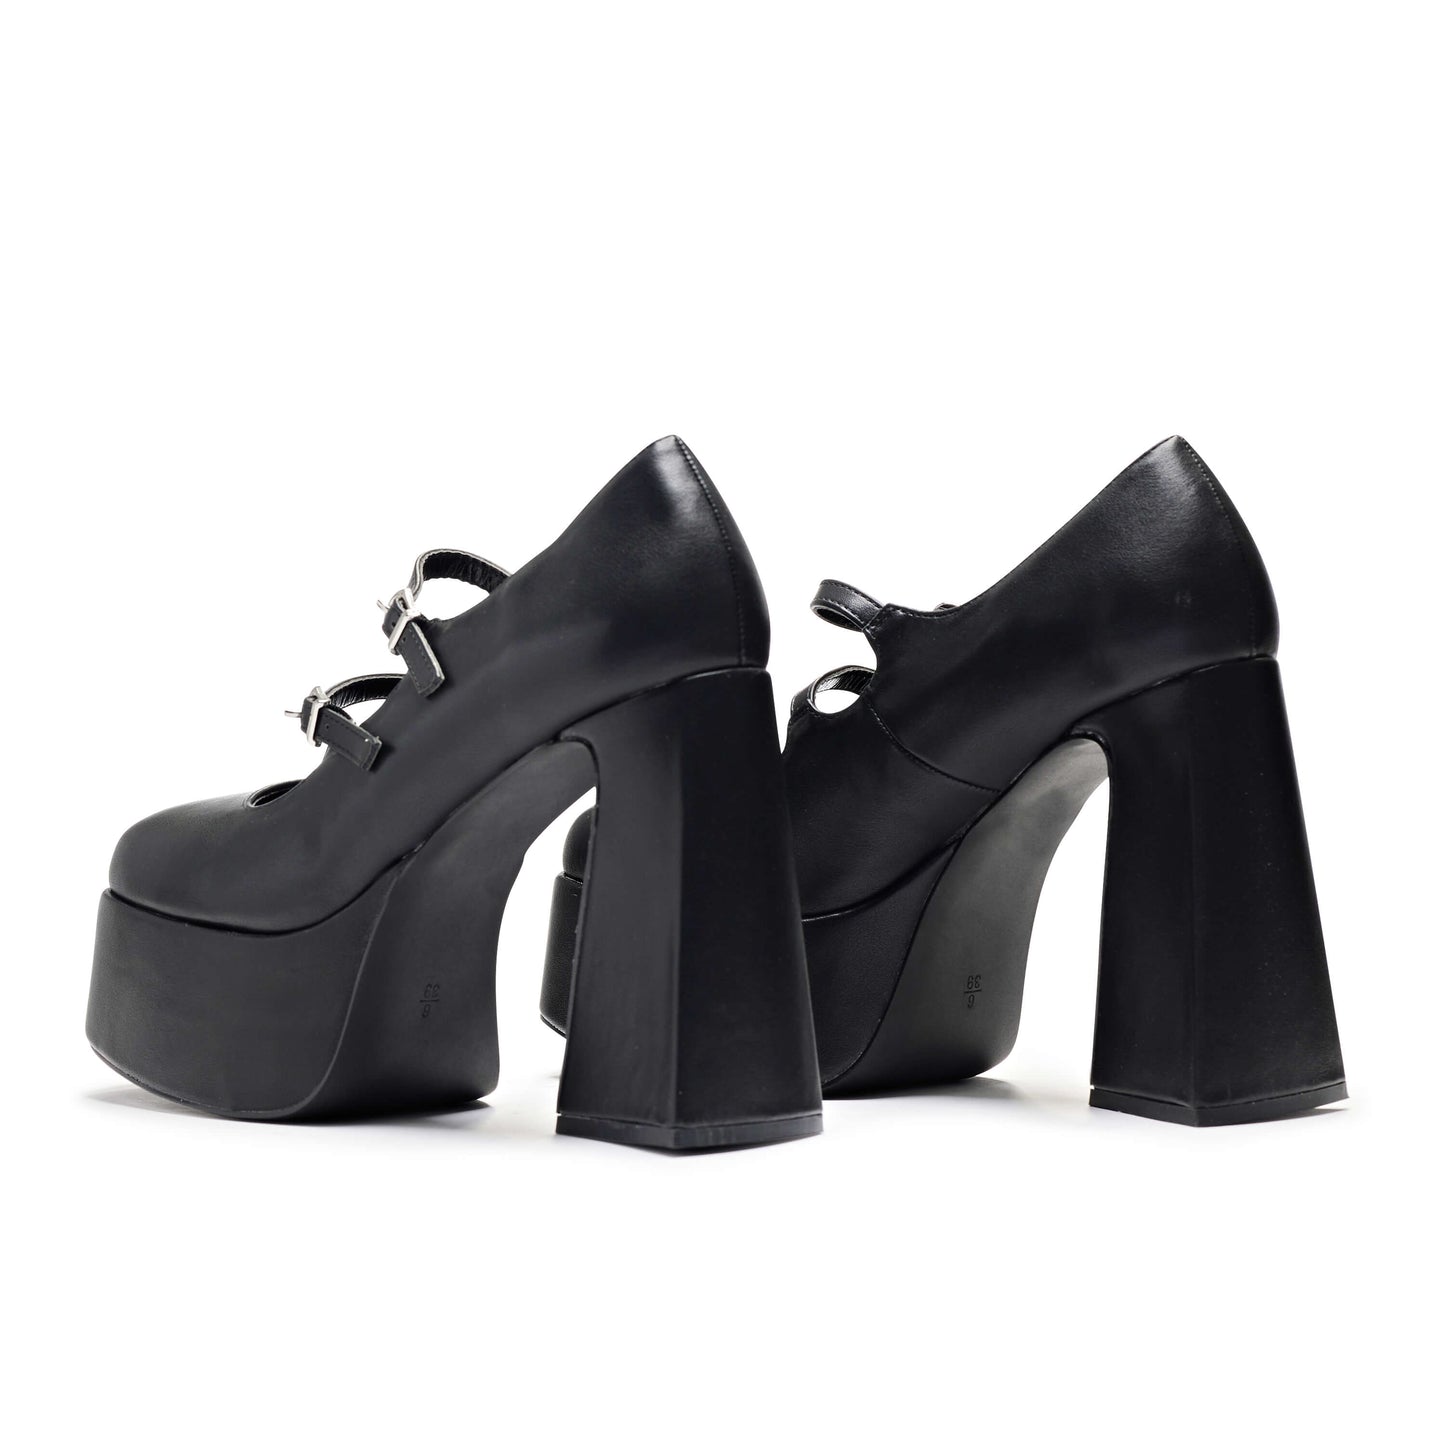 Zeba Black Platform Heels - Shoes - KOI Footwear - Black - Back Side View